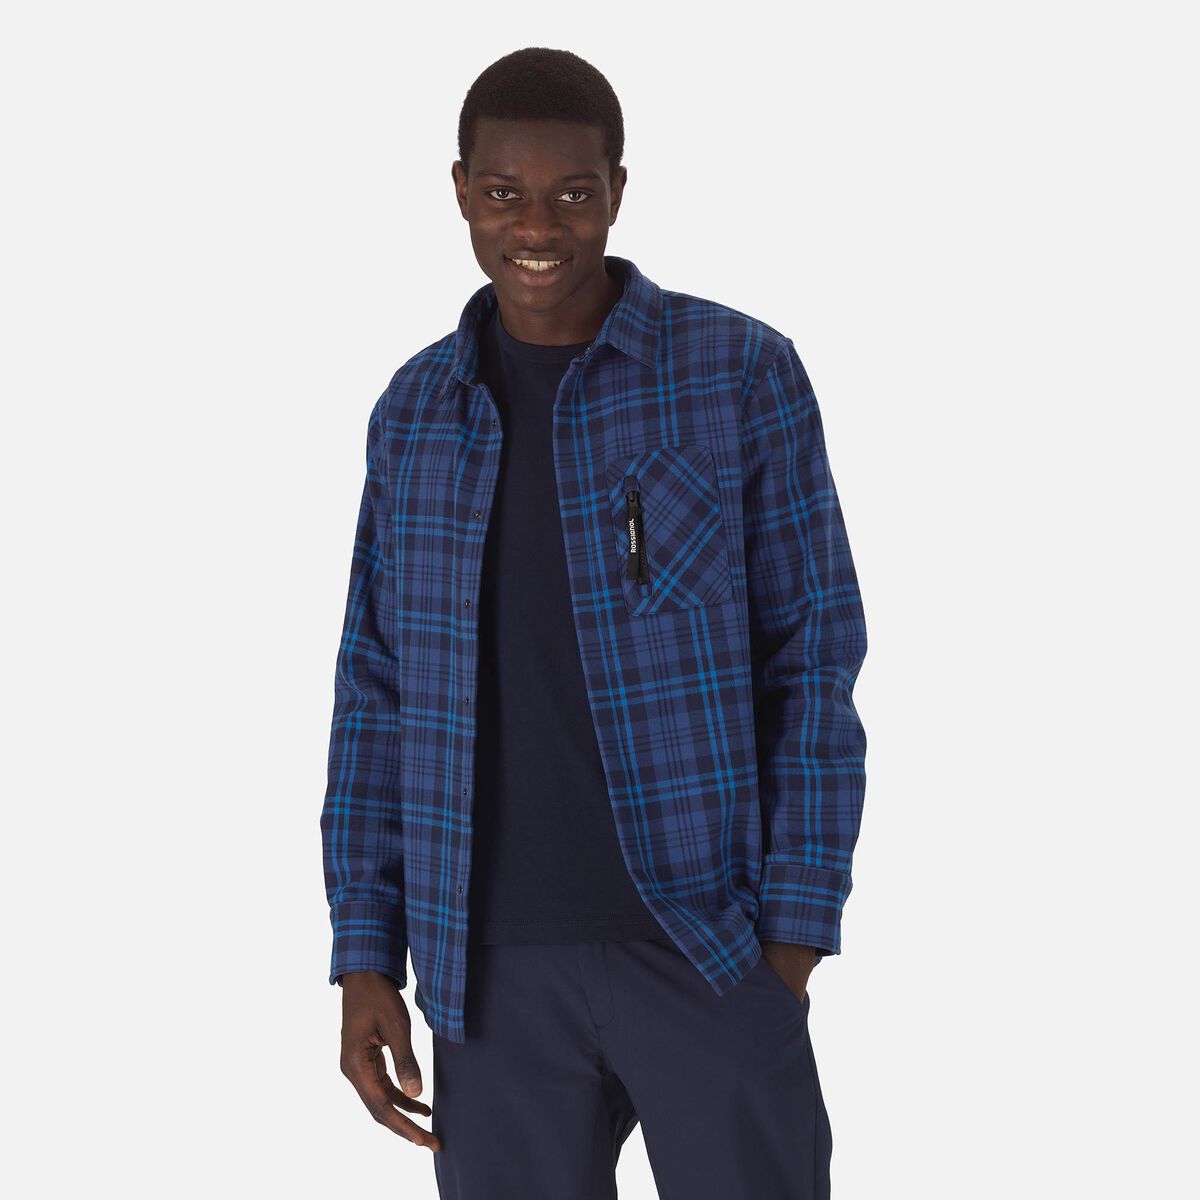 Lucky Brand Men's Plaid Work Wear Cloud Soft Long Sleeve Flannel